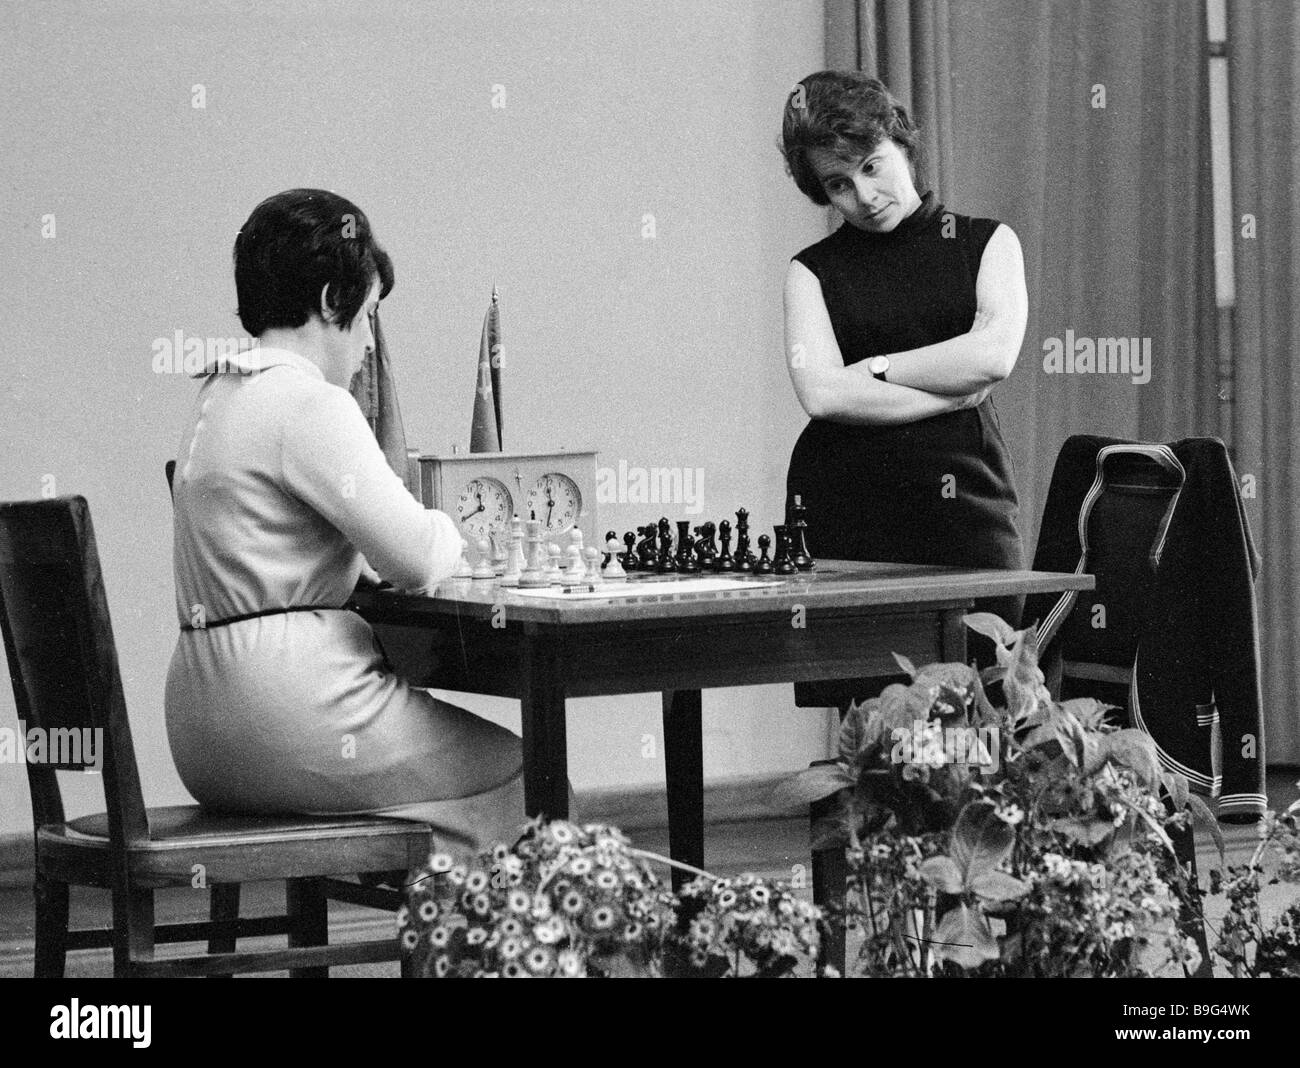 The 12th match in a world chess tournament between Nona Gaprindashvili left and Alla Kushnir right Stock Photo pic